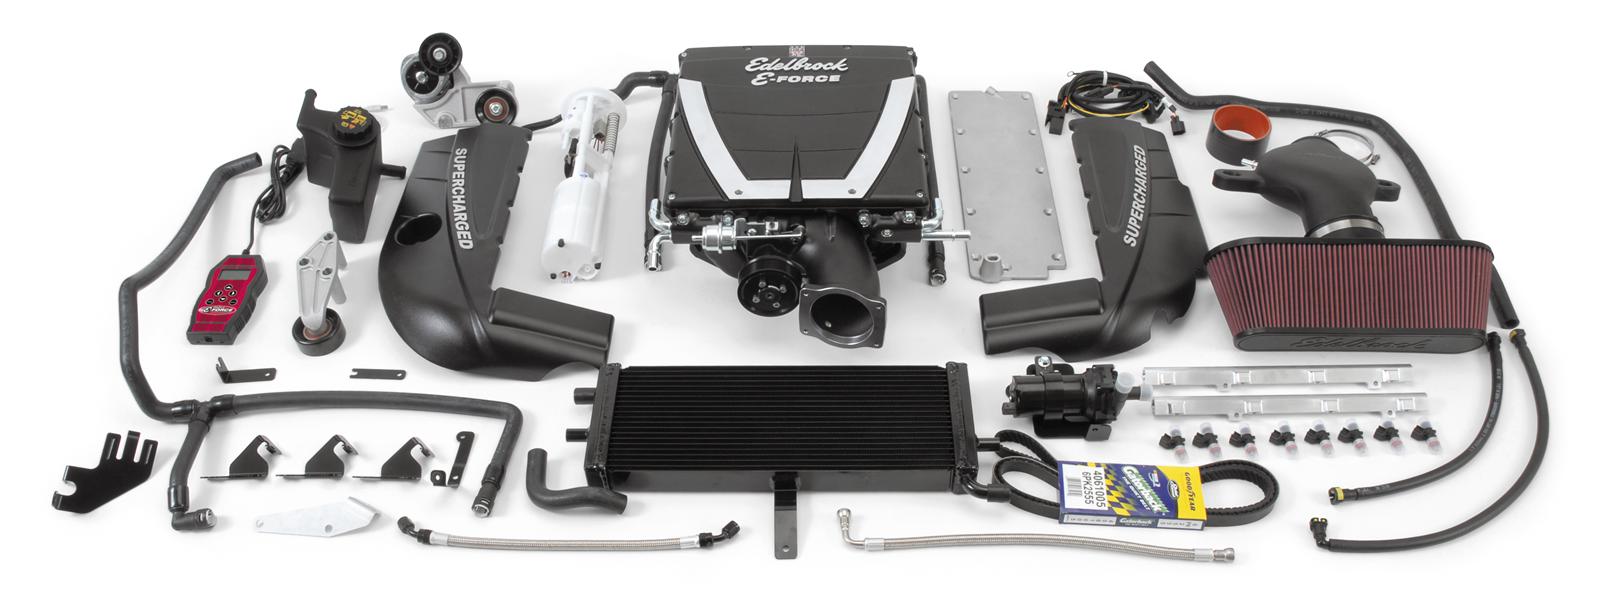 Edelbrock Supercharger, Stage 1-Street Kit, 2008-2013, GM, Corvette, LS3, Without Tuner, Part# 15910